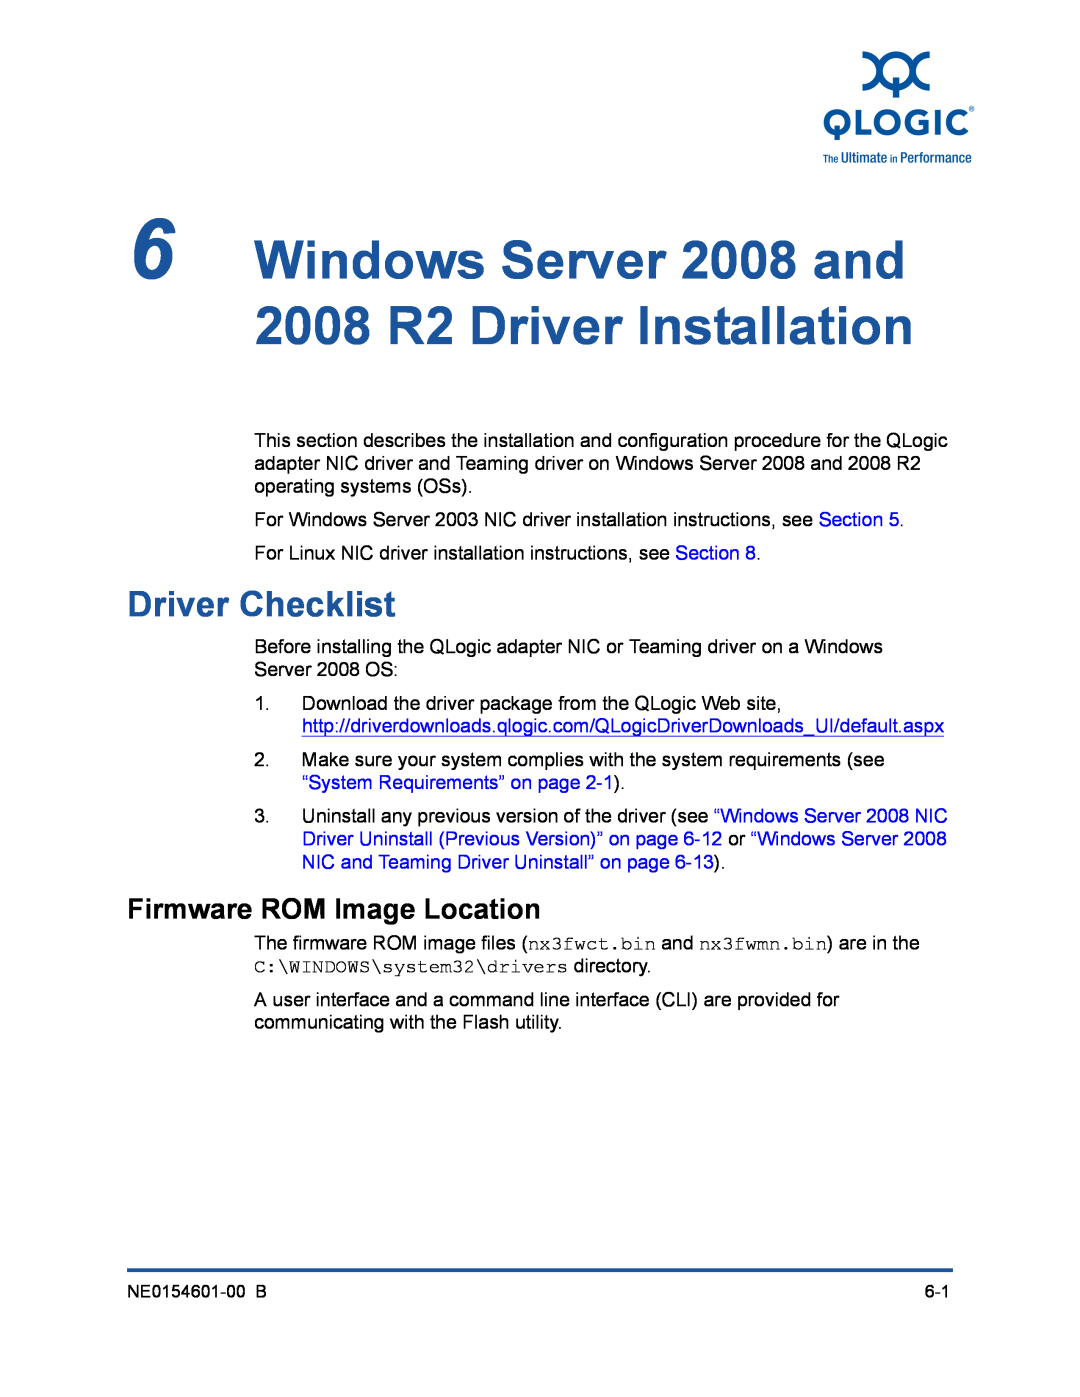 Q-Logic 3000, 3100 manual Windows Server 2008 and 2008 R2 Driver Installation, Driver Checklist, Firmware ROM Image Location 